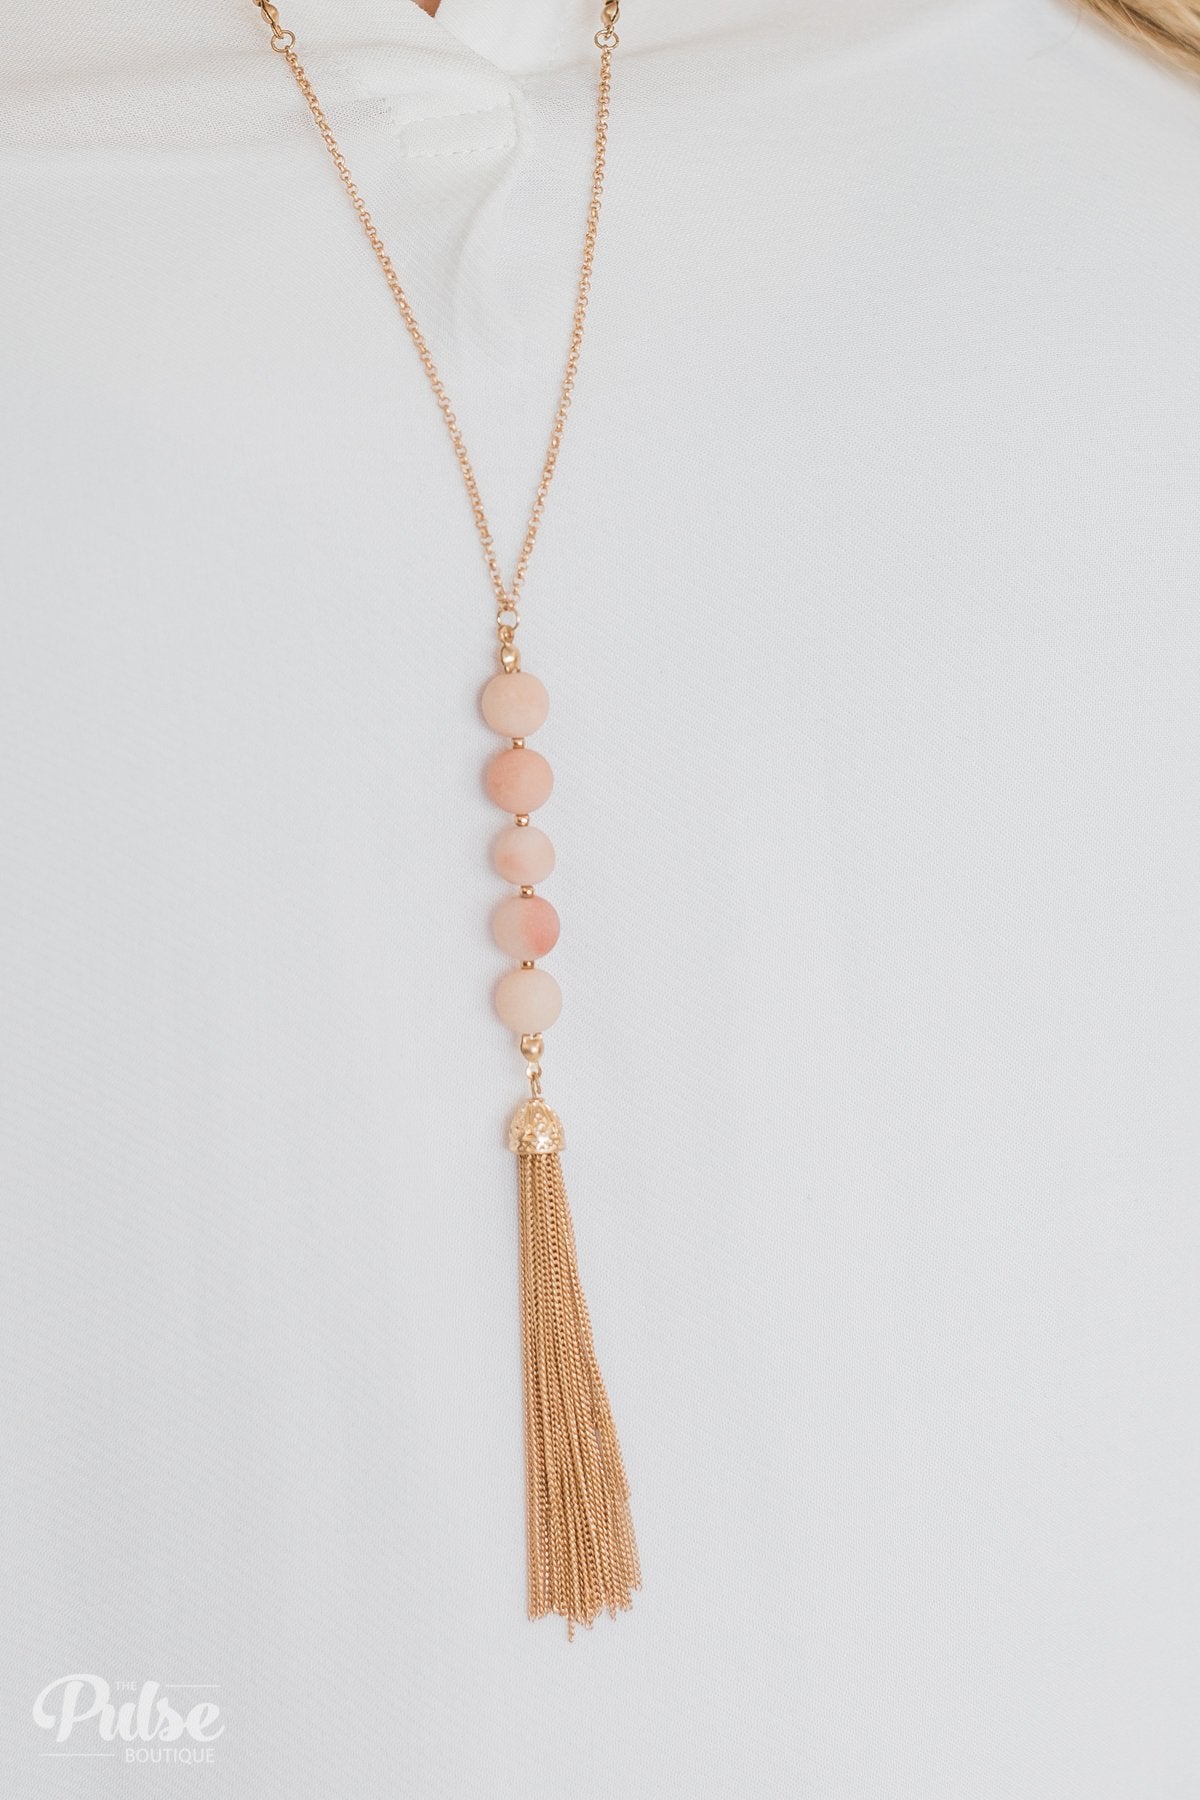 Adjustable Beaded Tassel Gold Necklace- Pink Aventurine